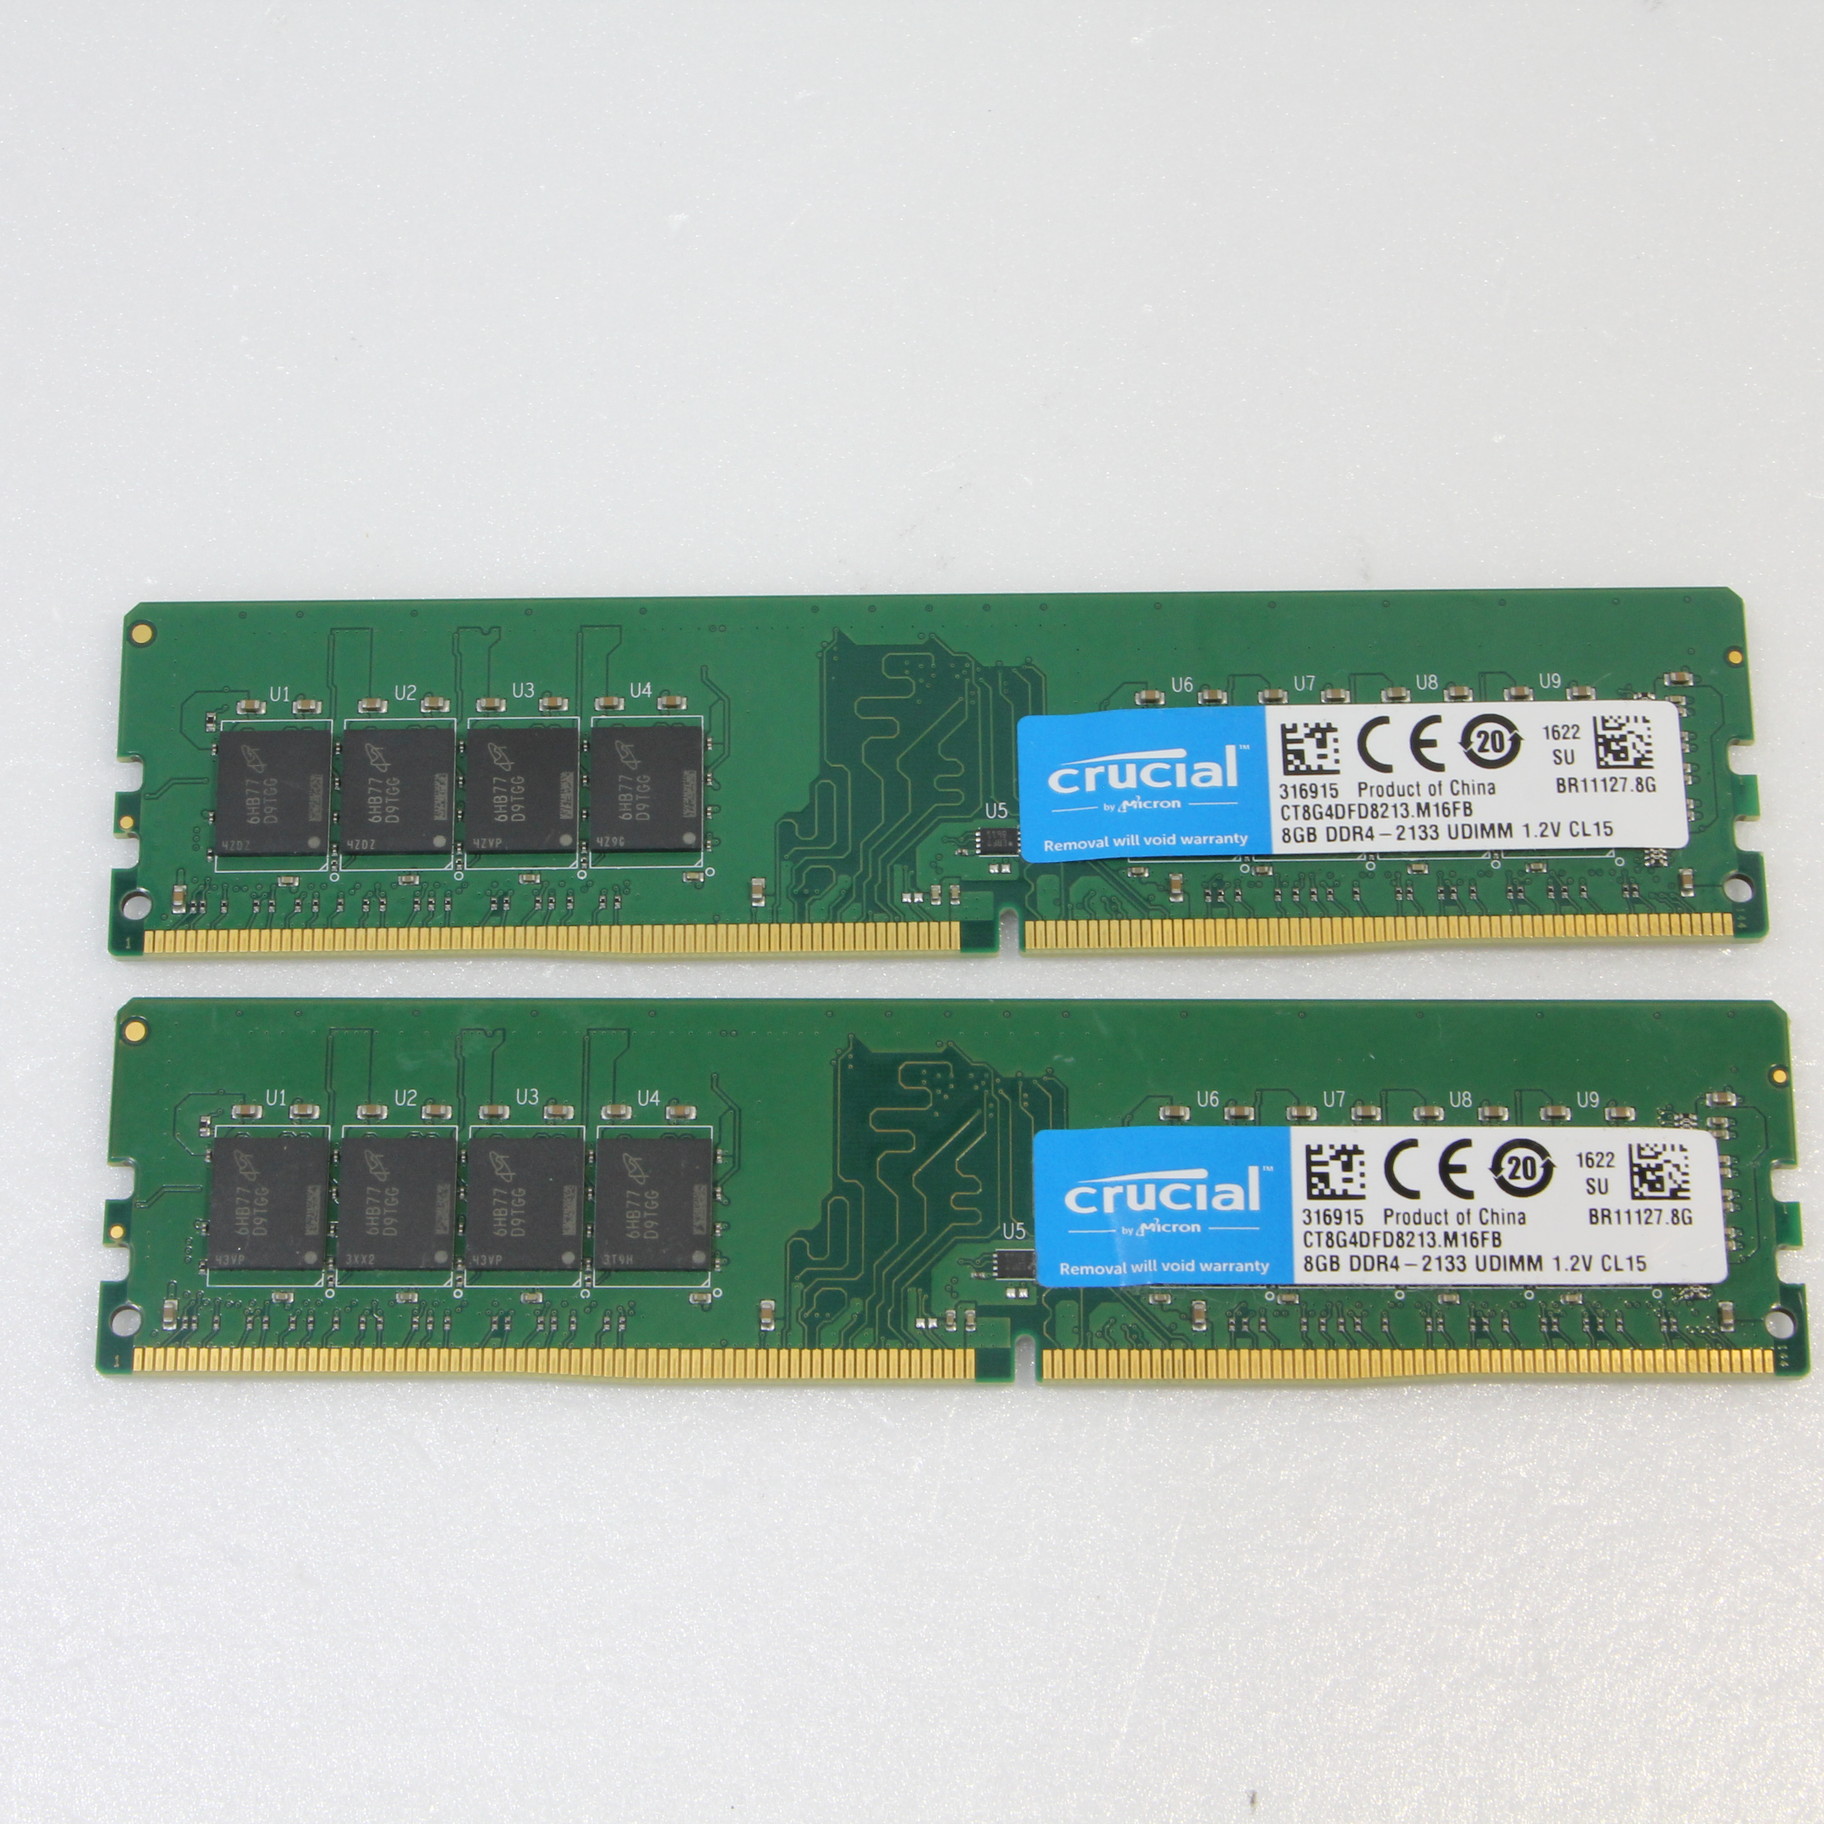 中古】CT2K8G4DFD8213 DDR4 PC4-17000 16GB 8GB×2枚組 [2133036121352 ...